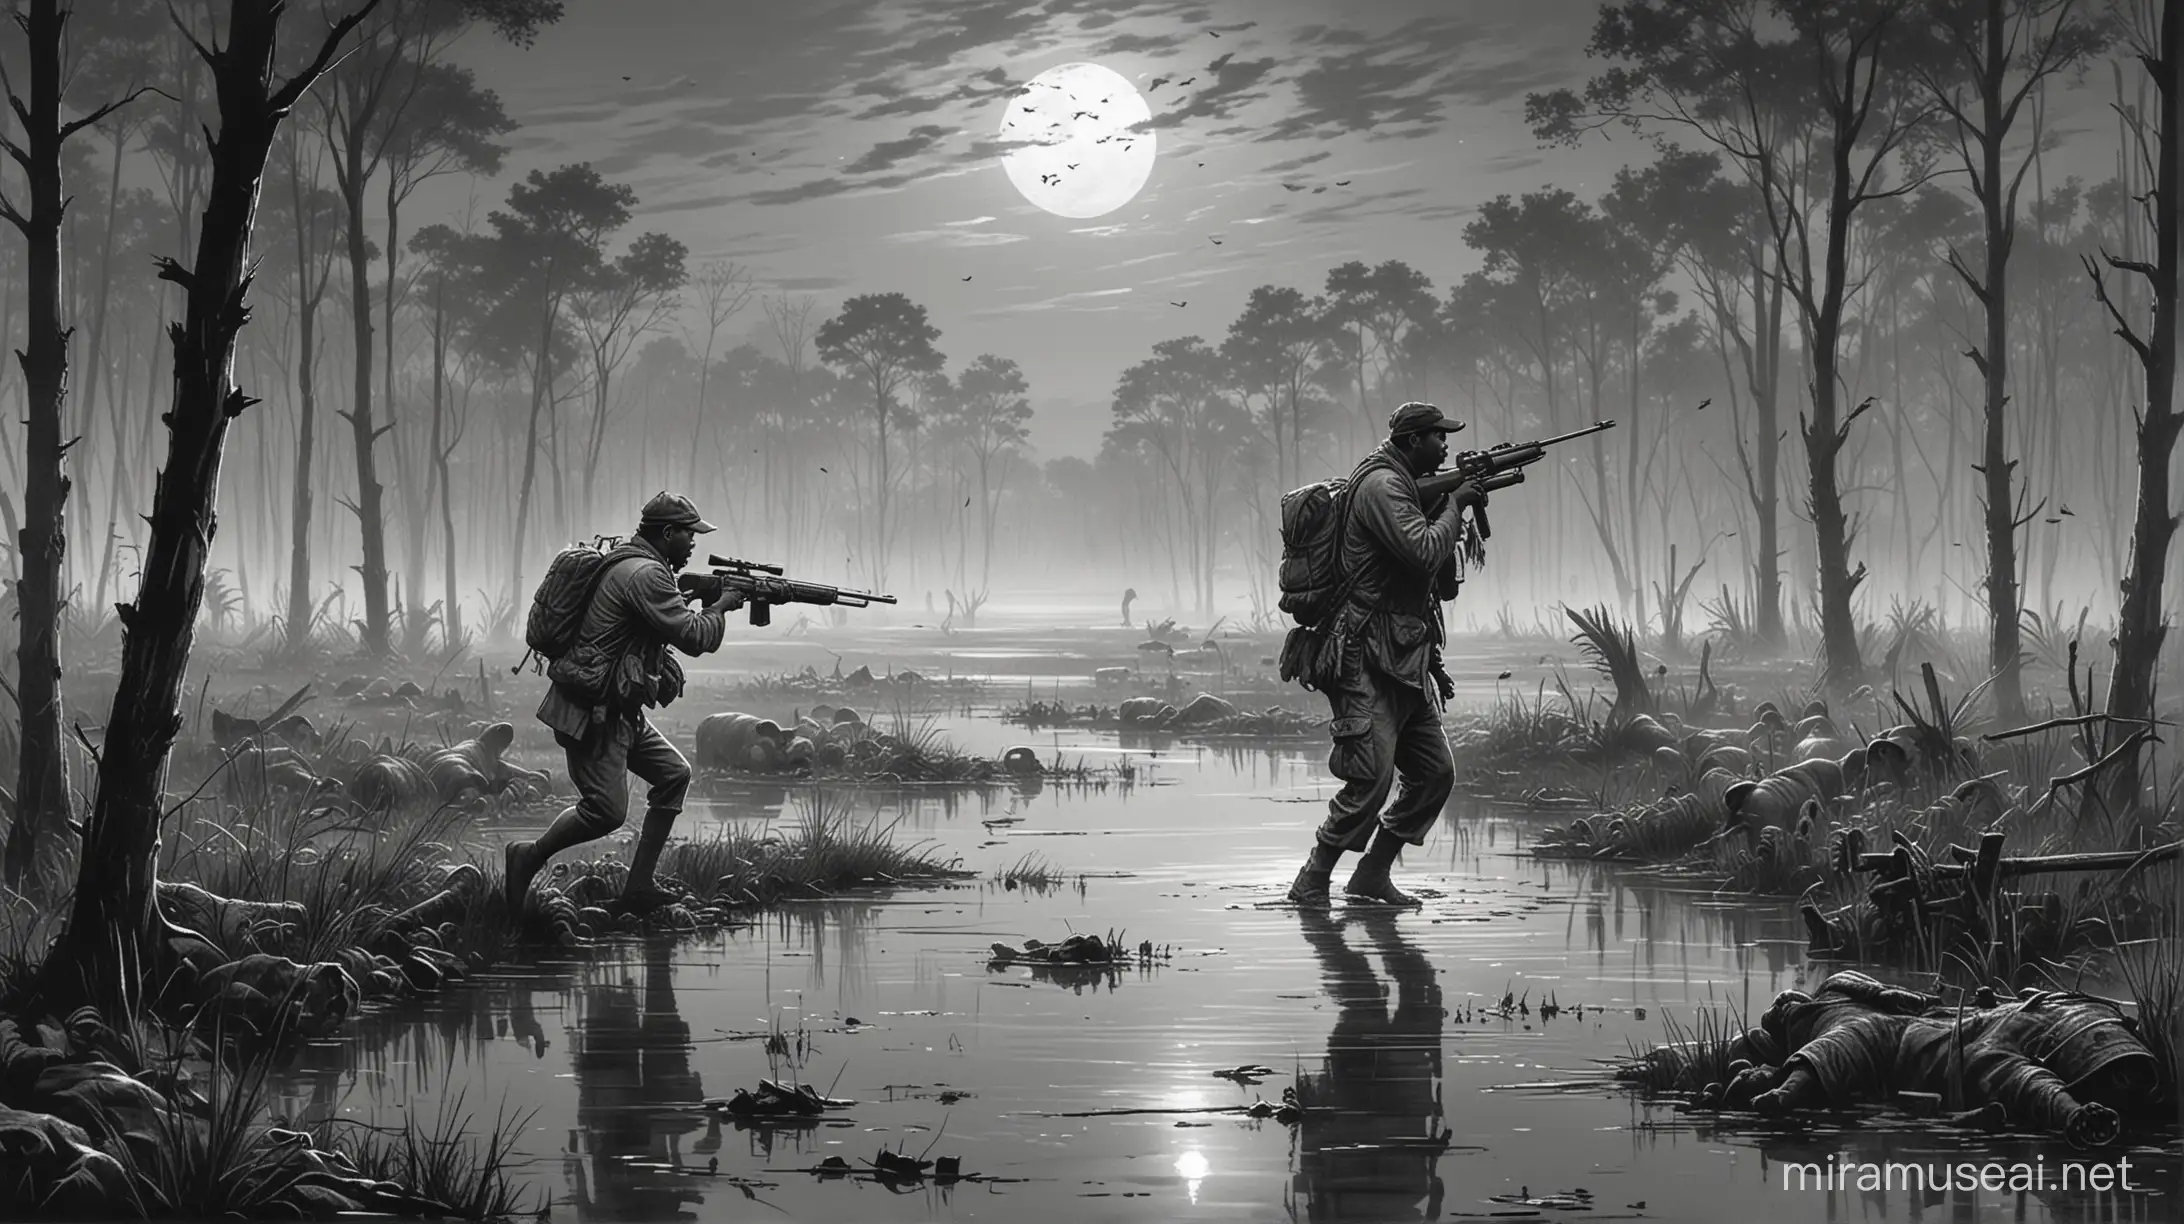 Generate the image of 2 black indian village men shooting big guns into a swamp at night. pig running long distance. sketch